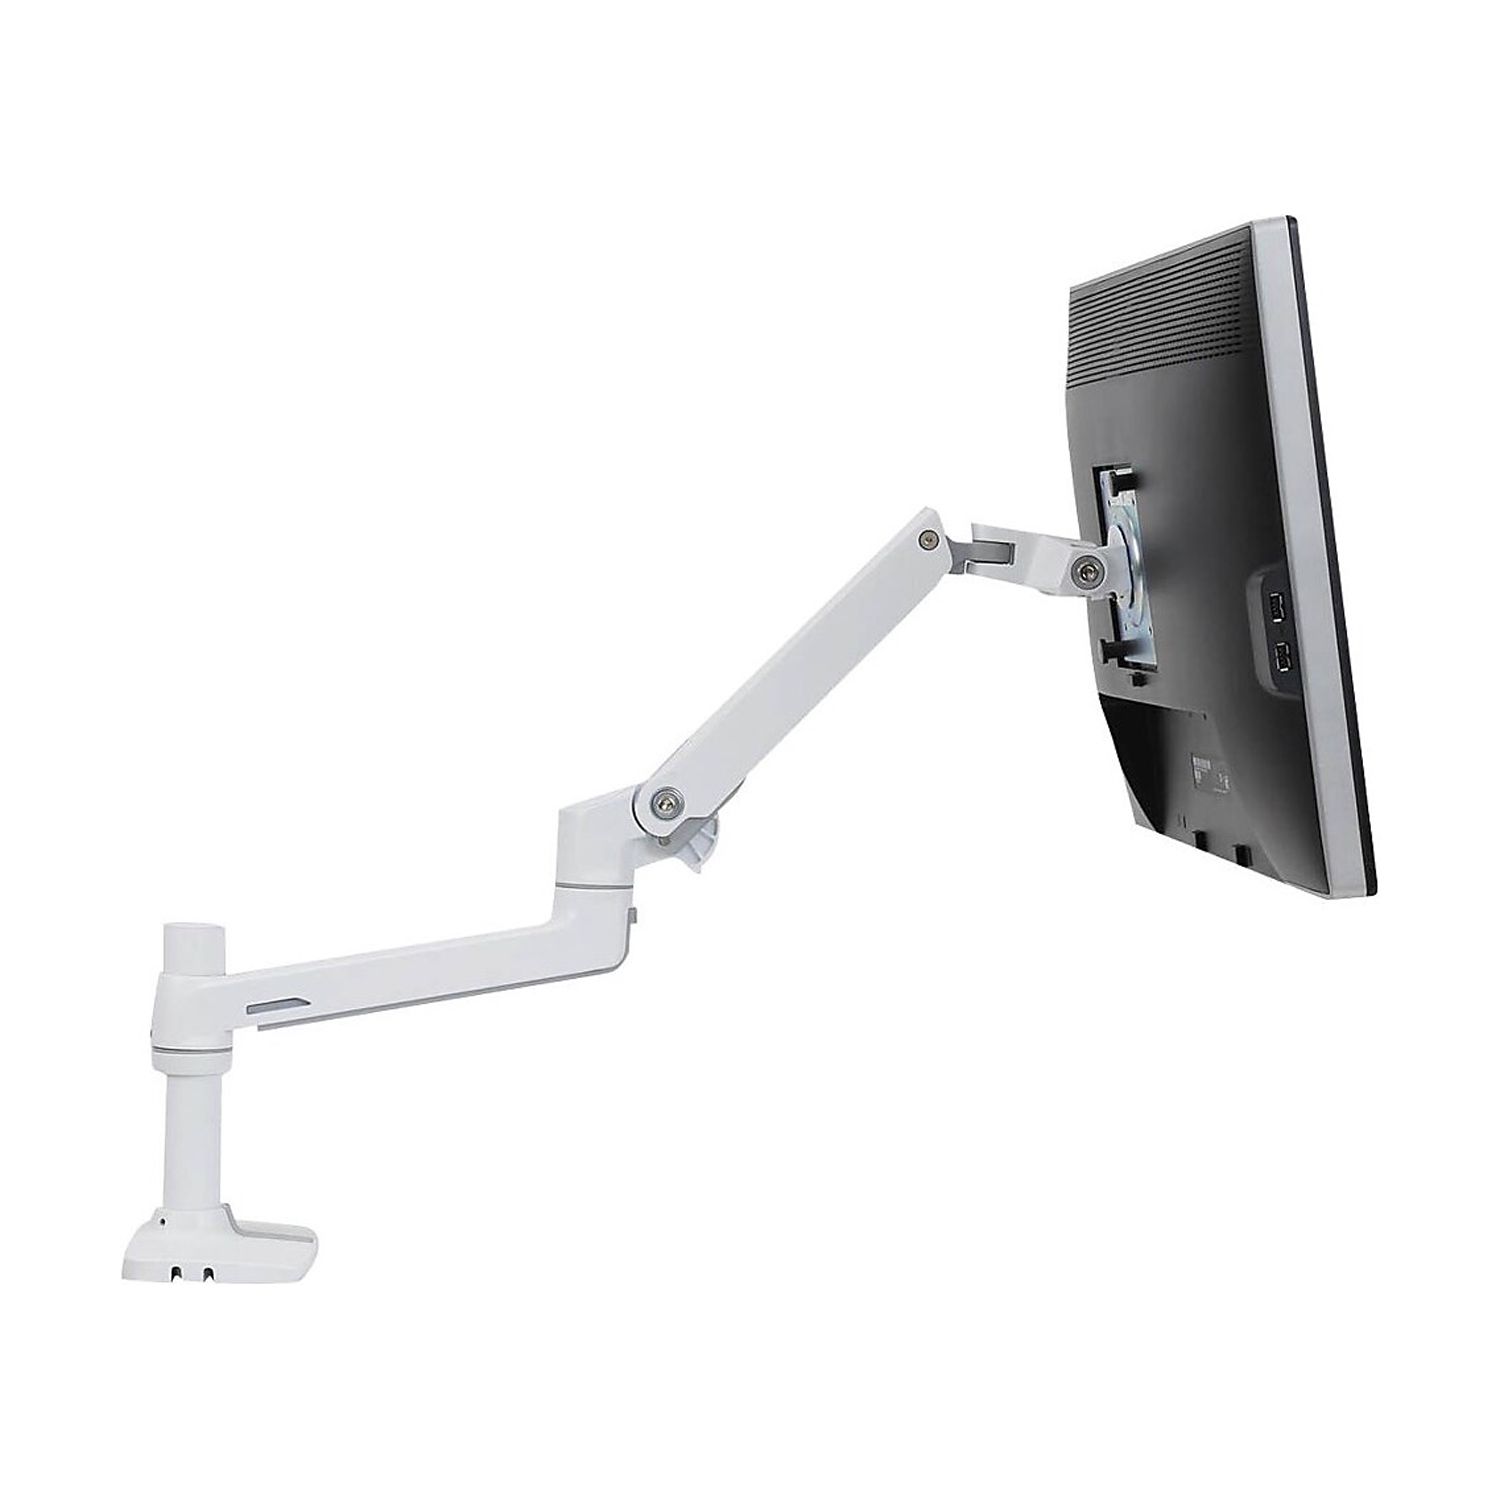 Ergotron Mounting Arm for Monitor, White - image 5 of 5